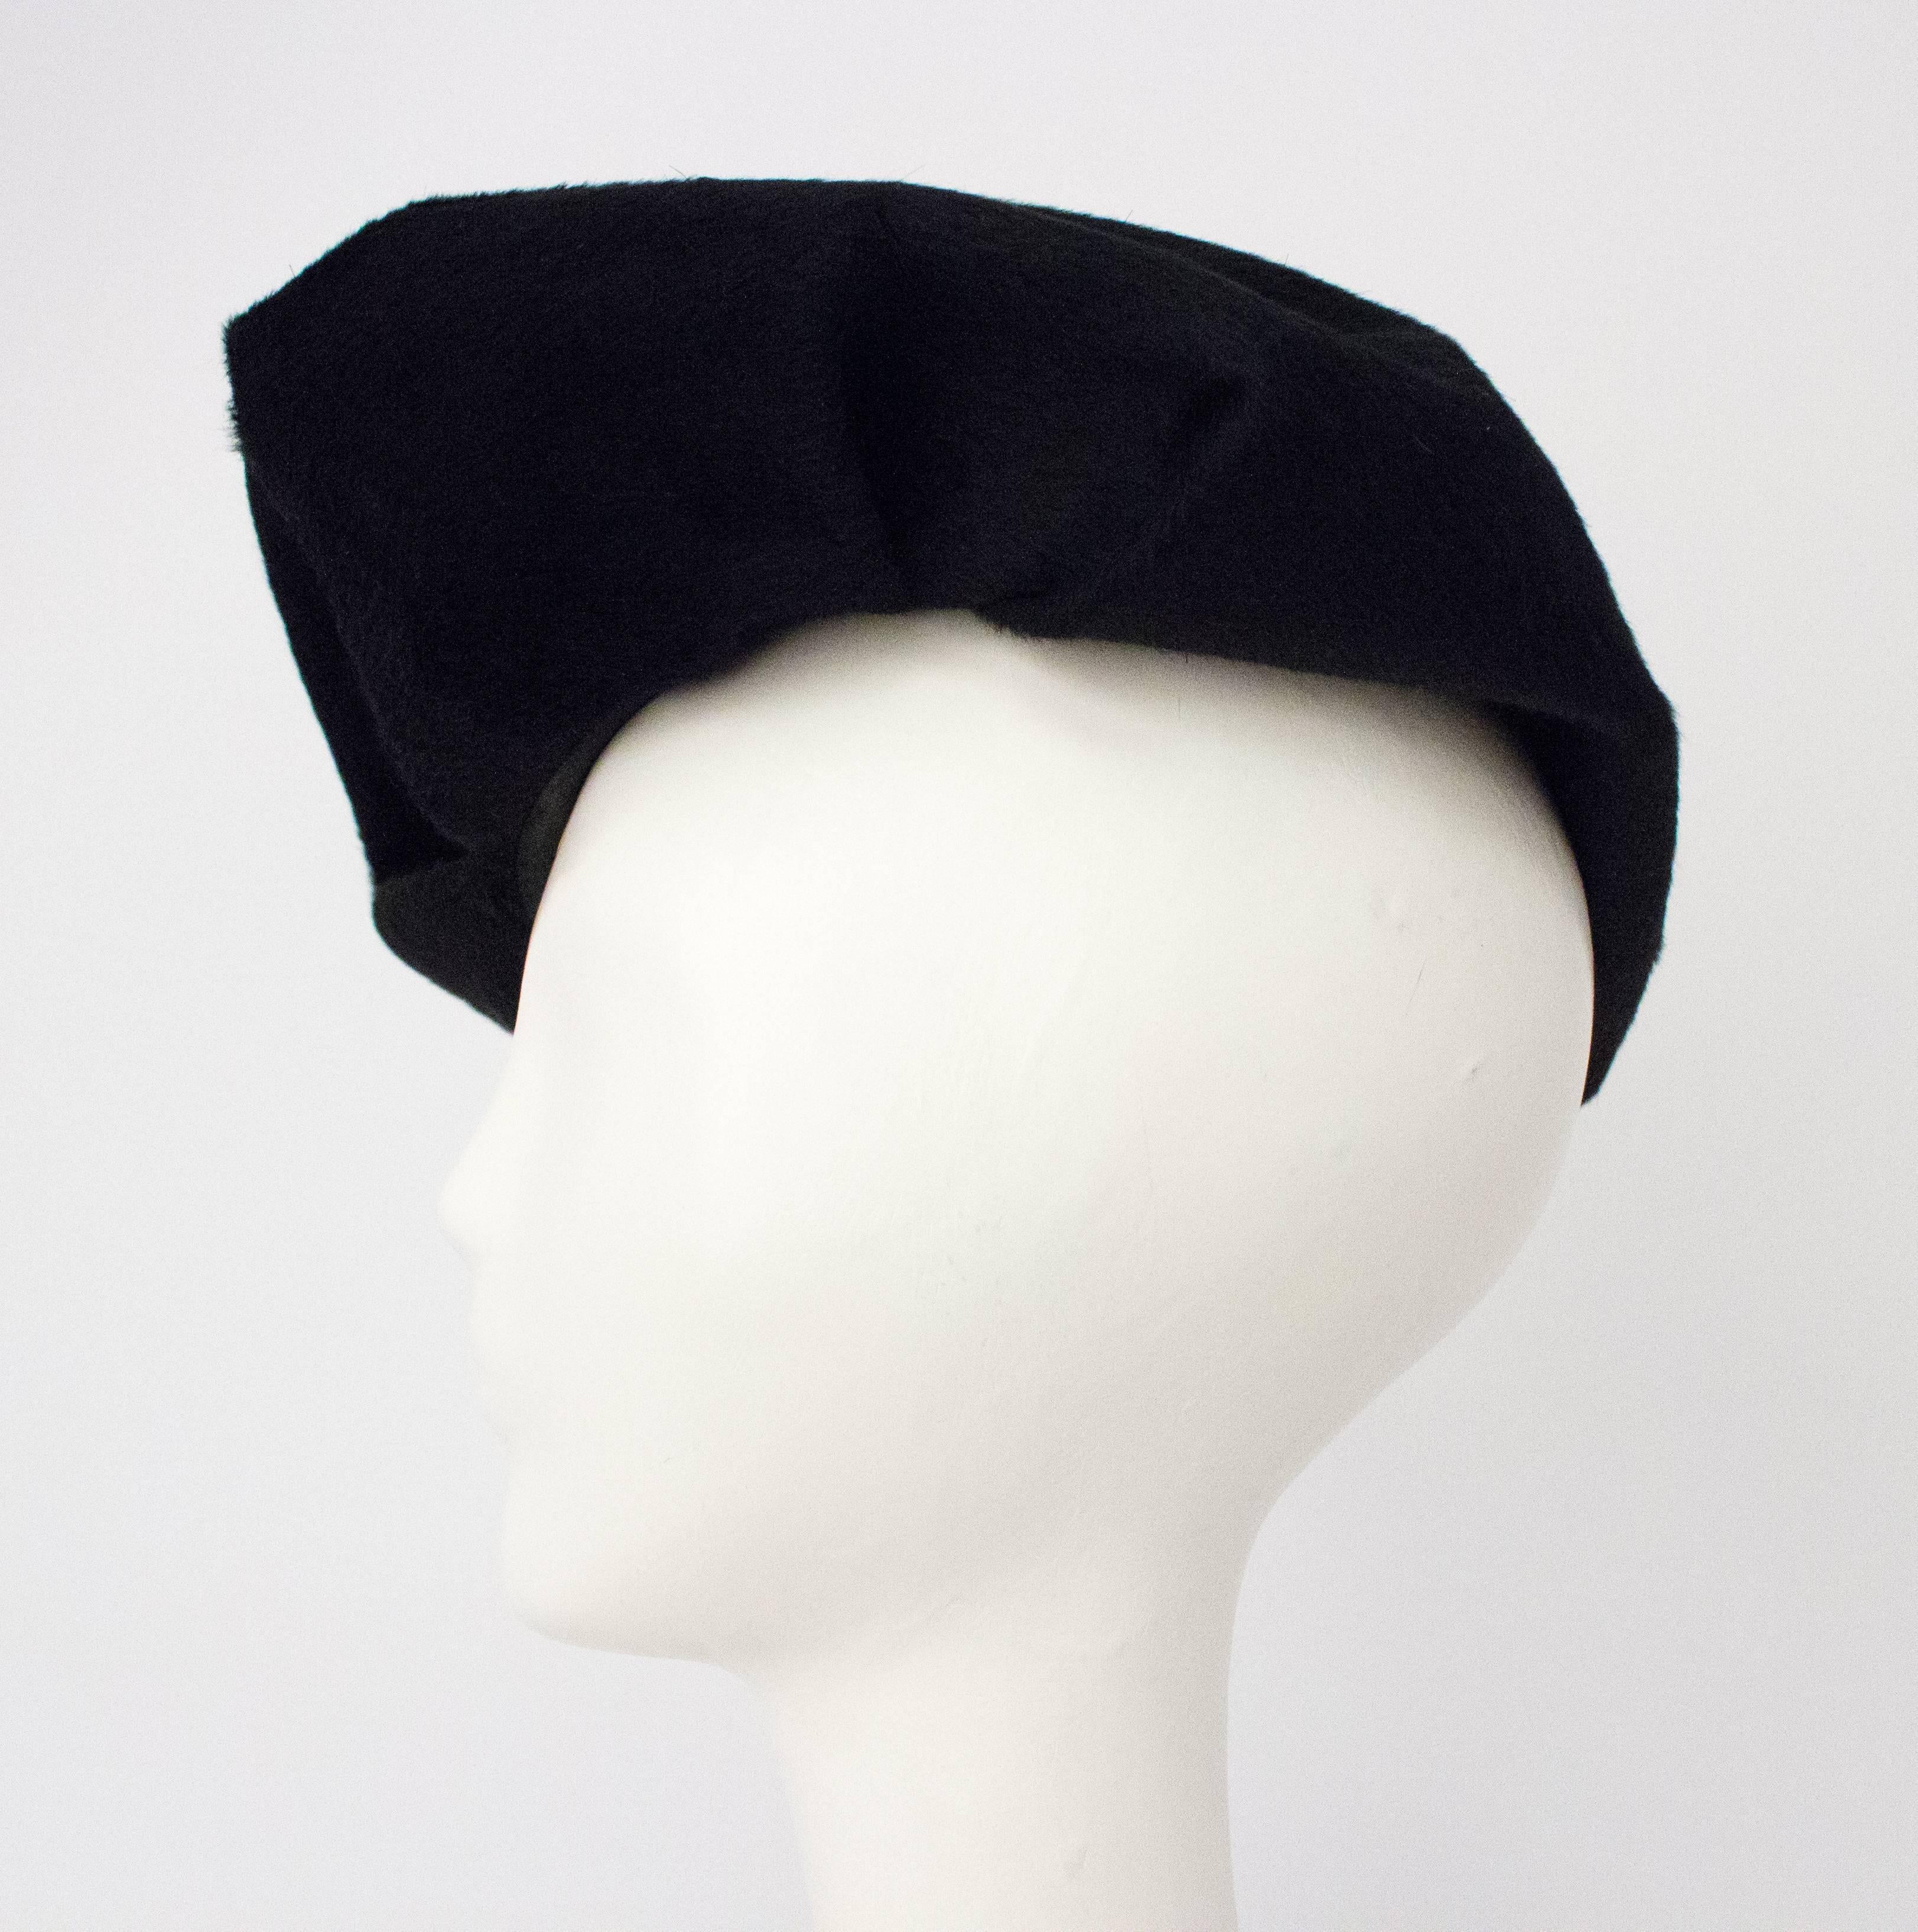 30s Hattie Carnegie Black Fur Felt Hat. Interior mesh scaffold. Grosgrain Interior band. 

Measurements:
Interior Circumference: 21inches